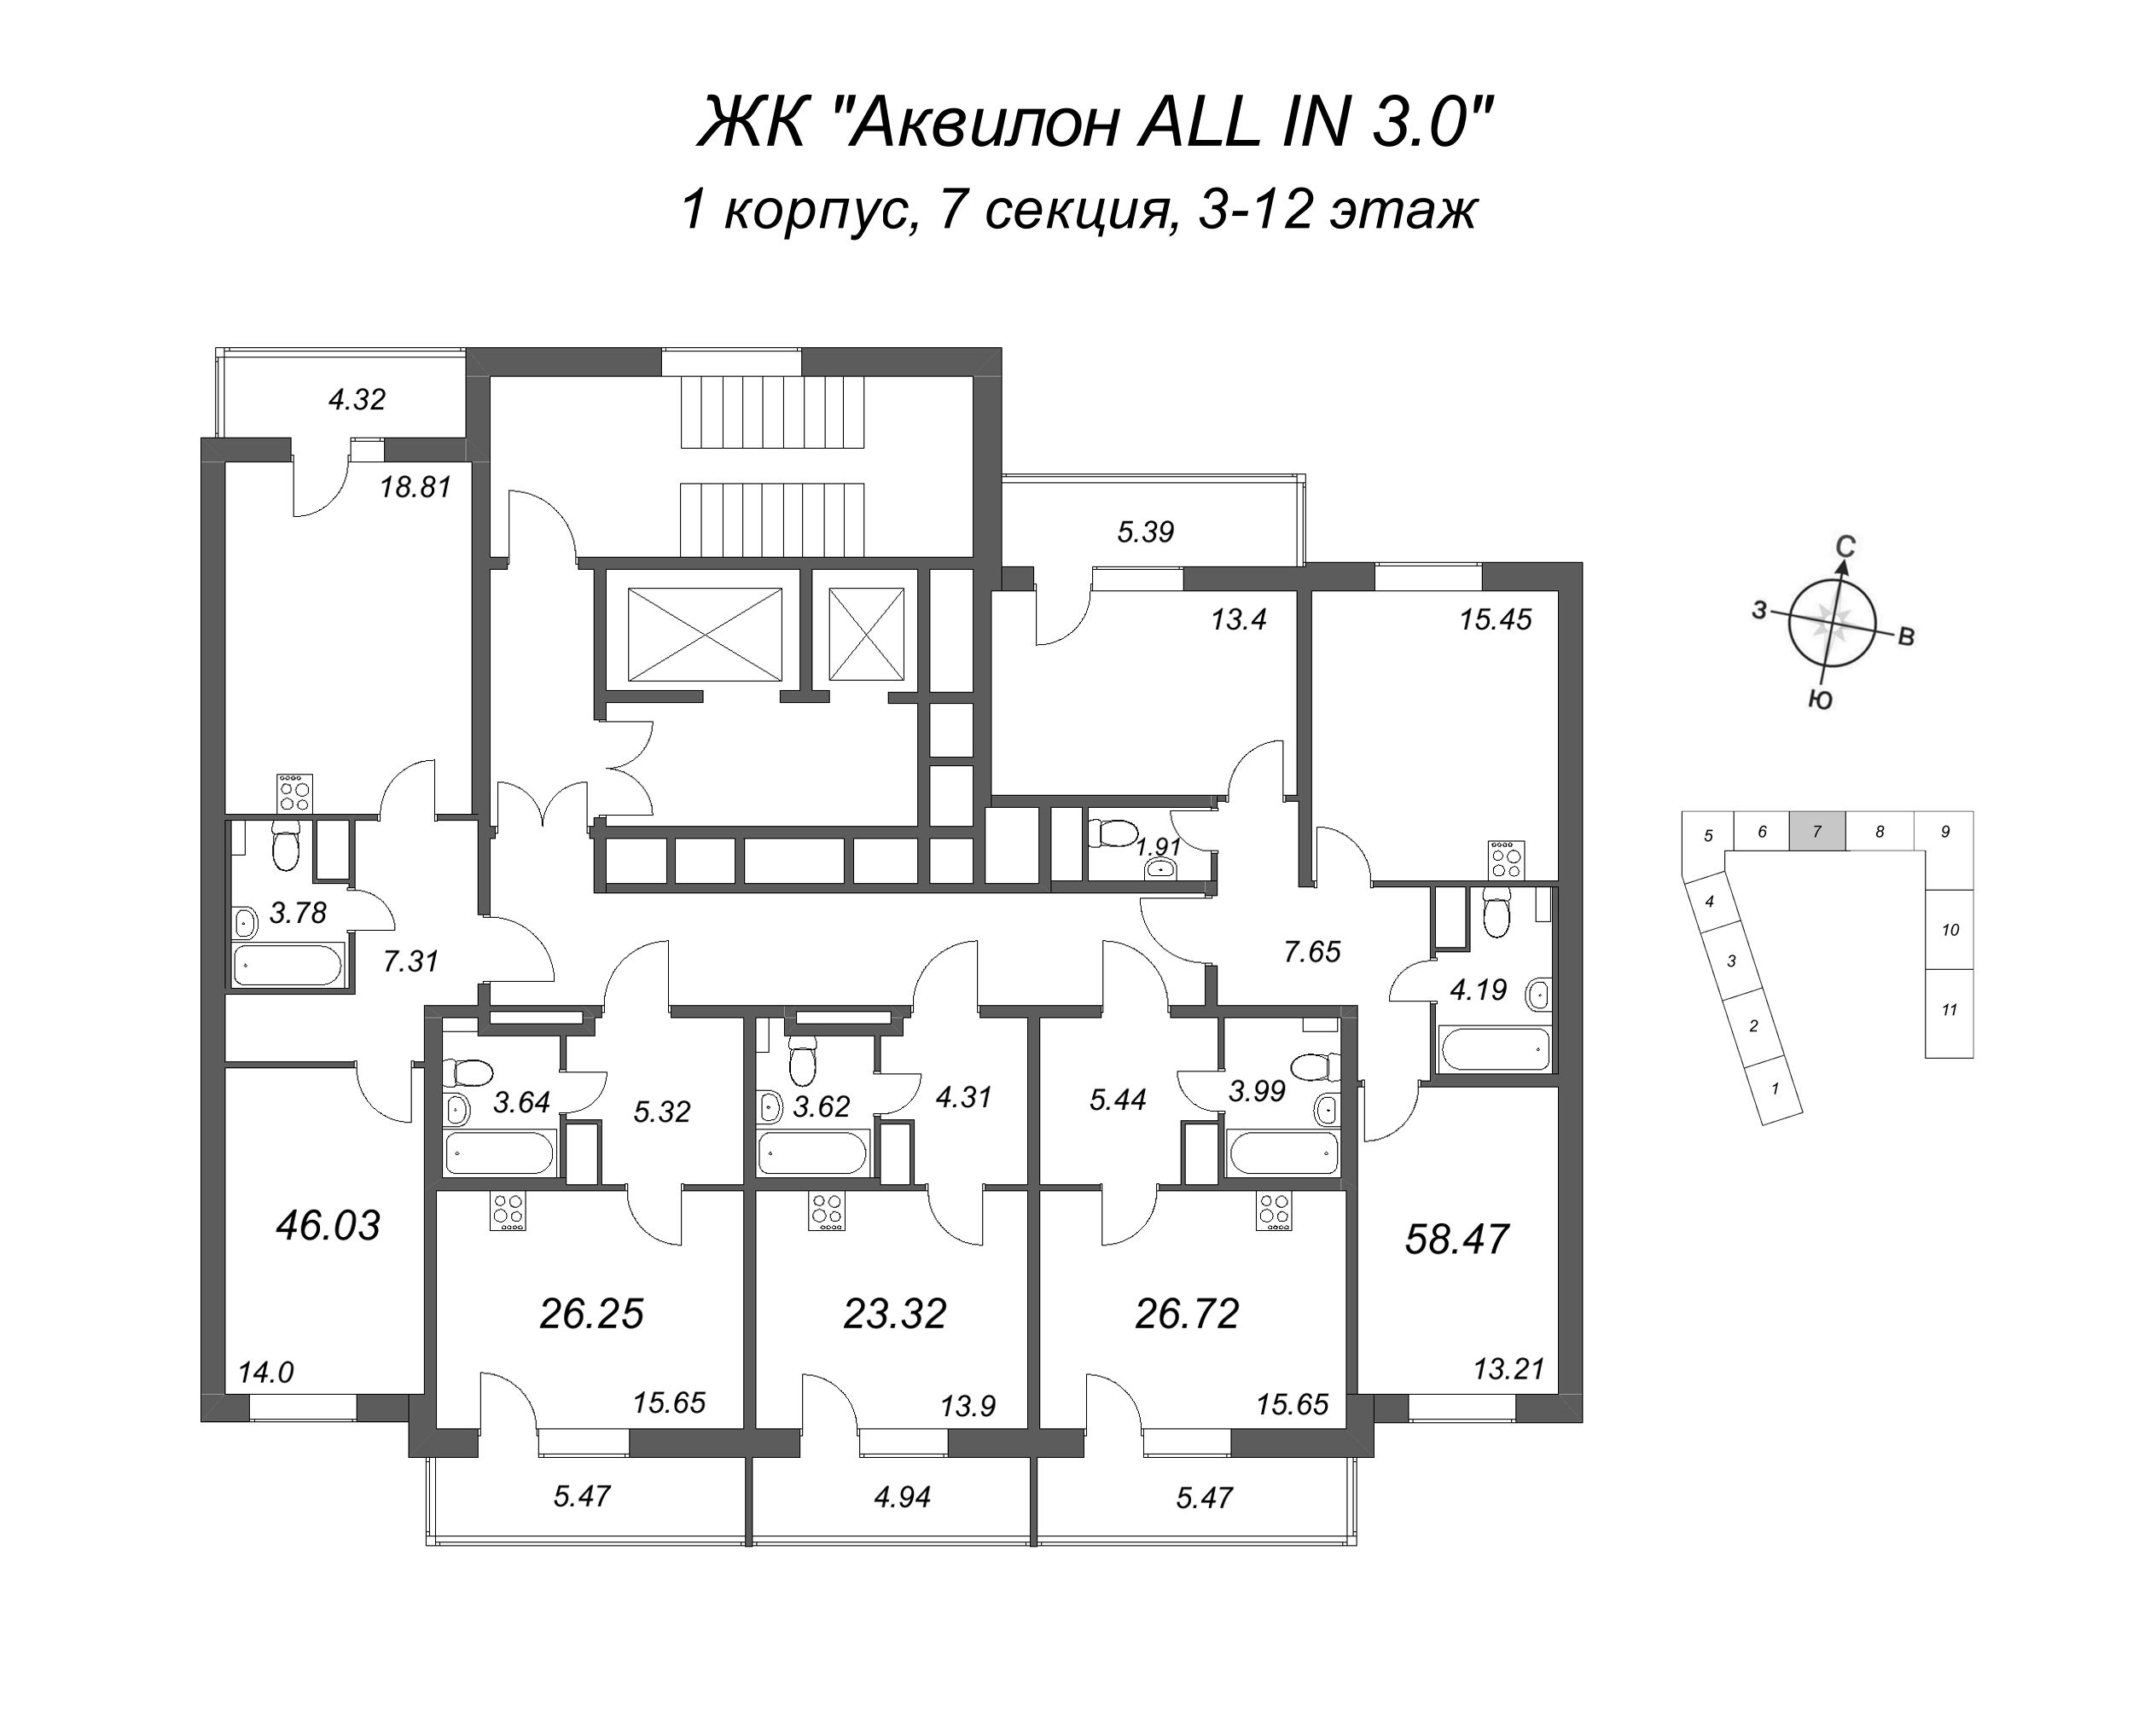 2-комнатная (Евро) квартира, 46.03 м² - планировка этажа